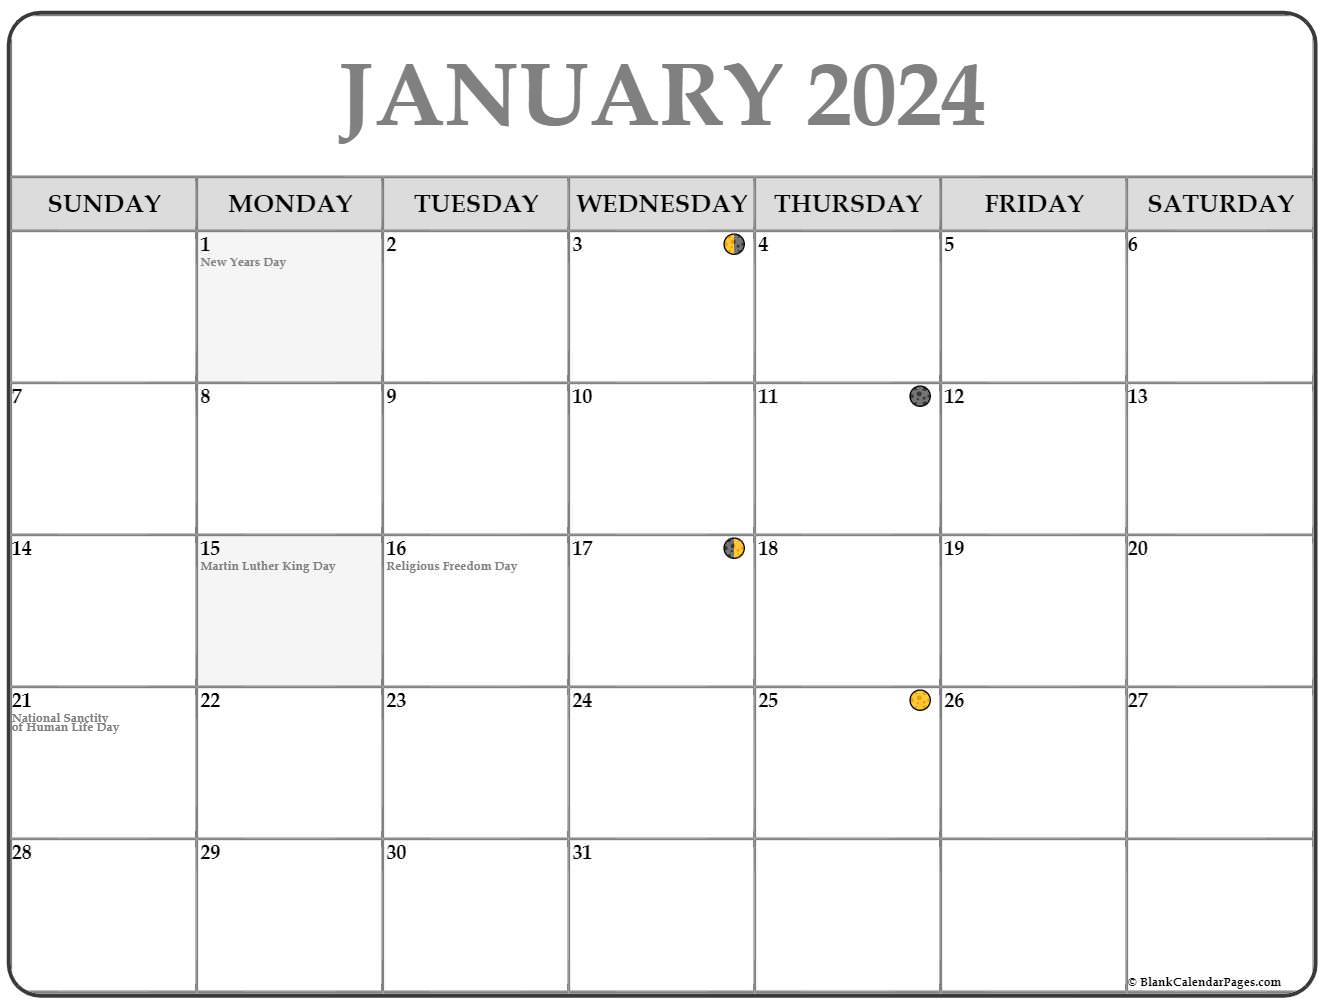 Moon Phase Calendar April 2022 January 2022 Lunar Calendar | Moon Phase Calendar